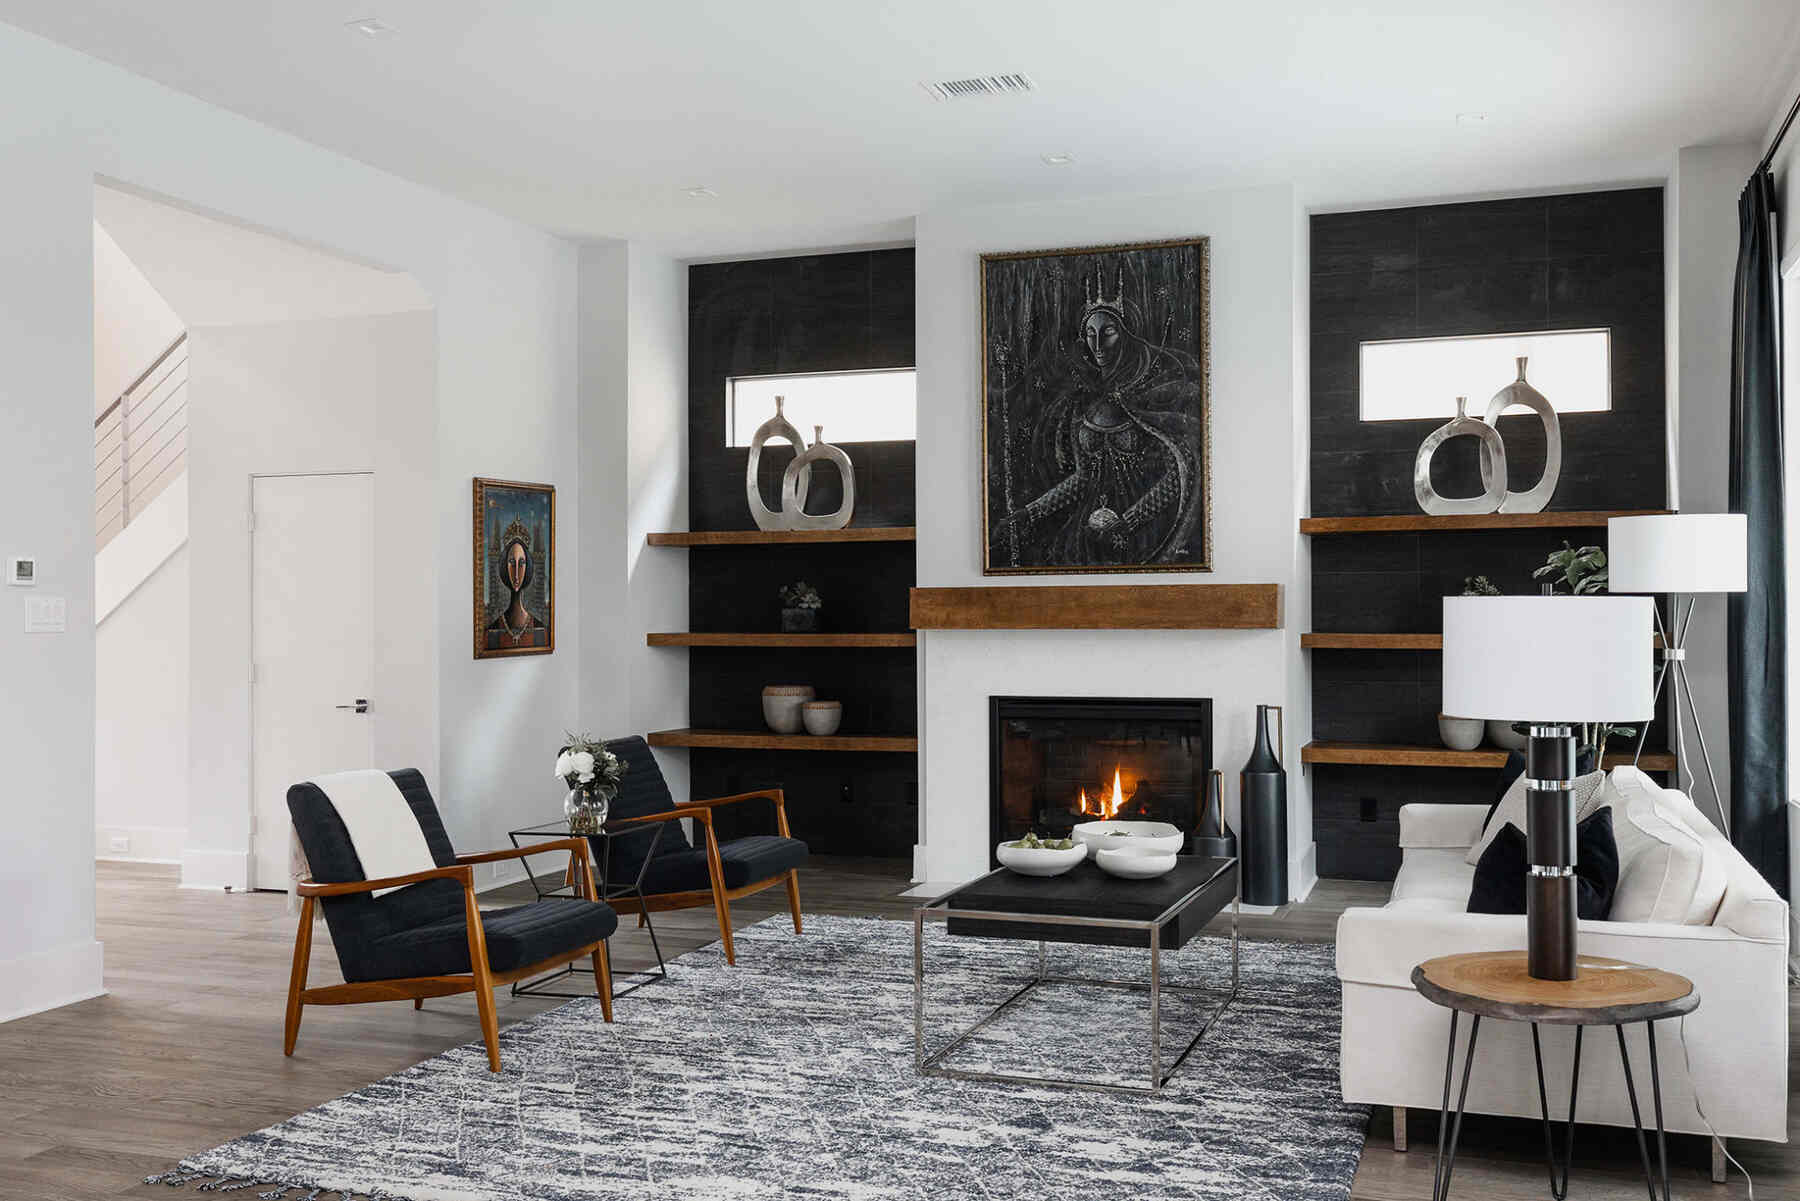 Living Room Furniture Arrangement Ideas